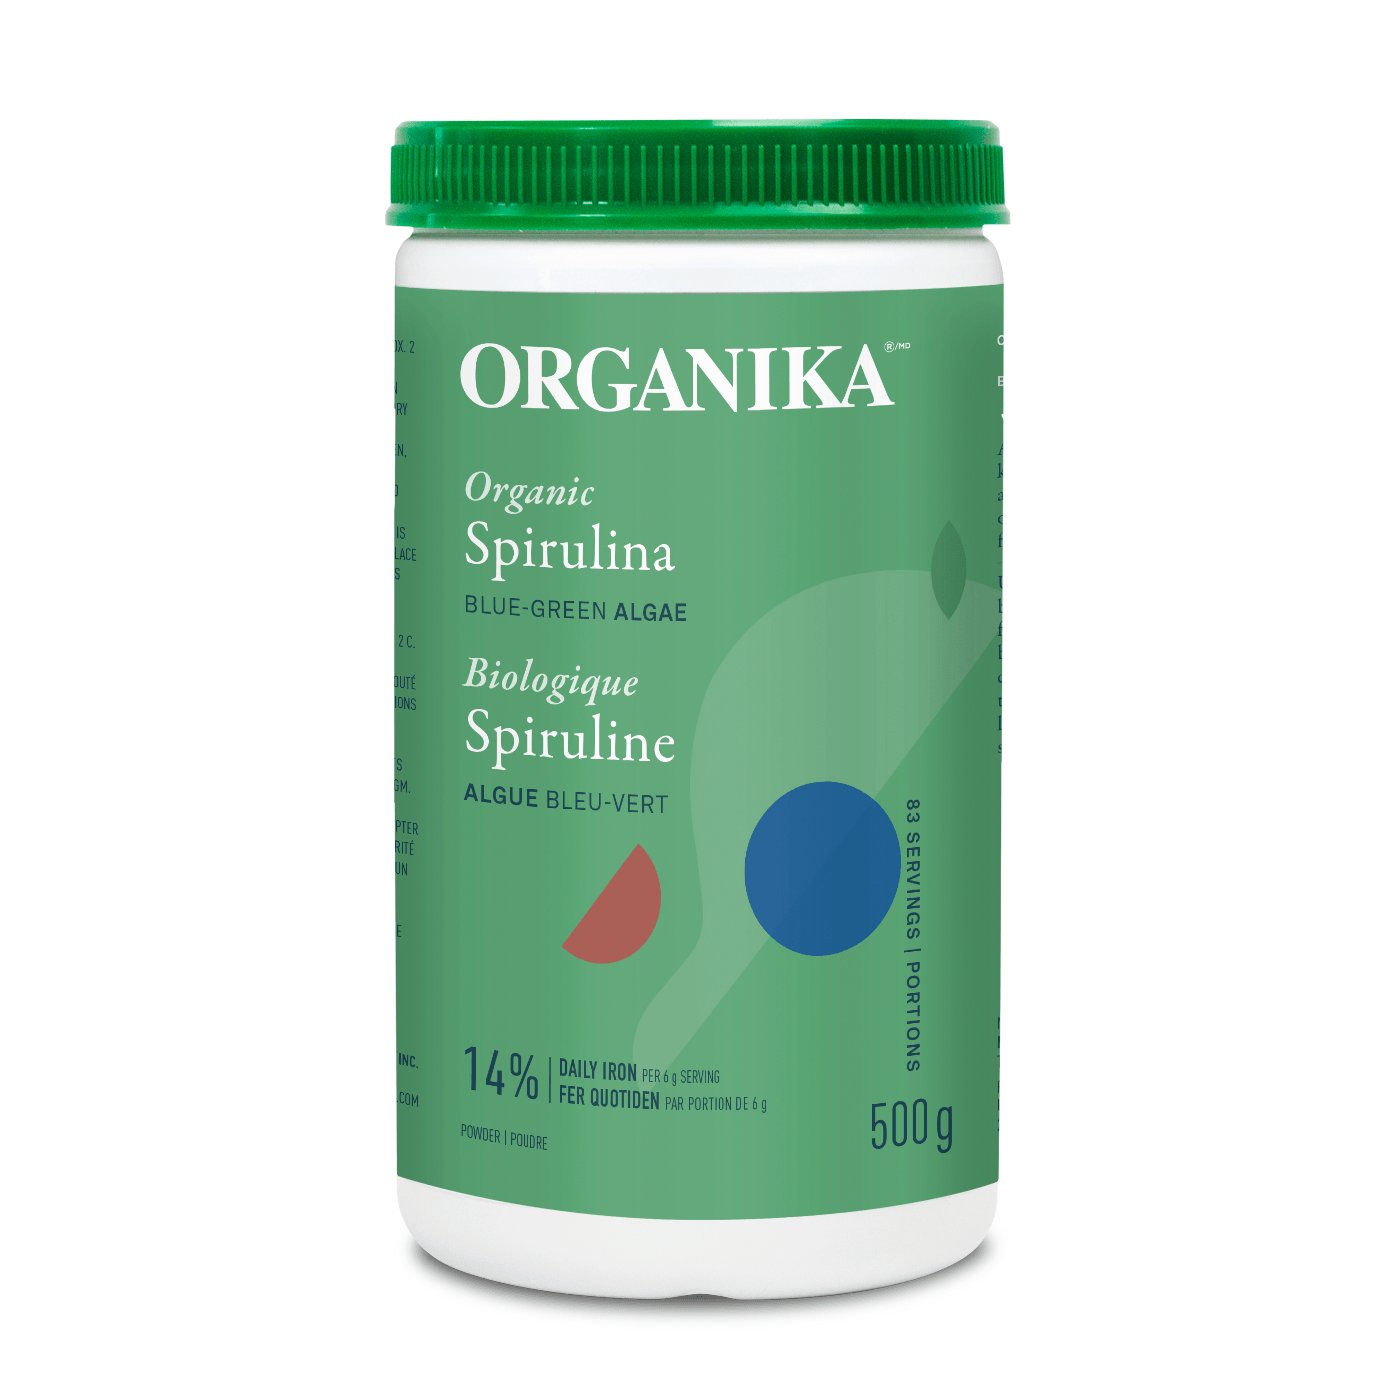 Organika Organic Spirulina 500g